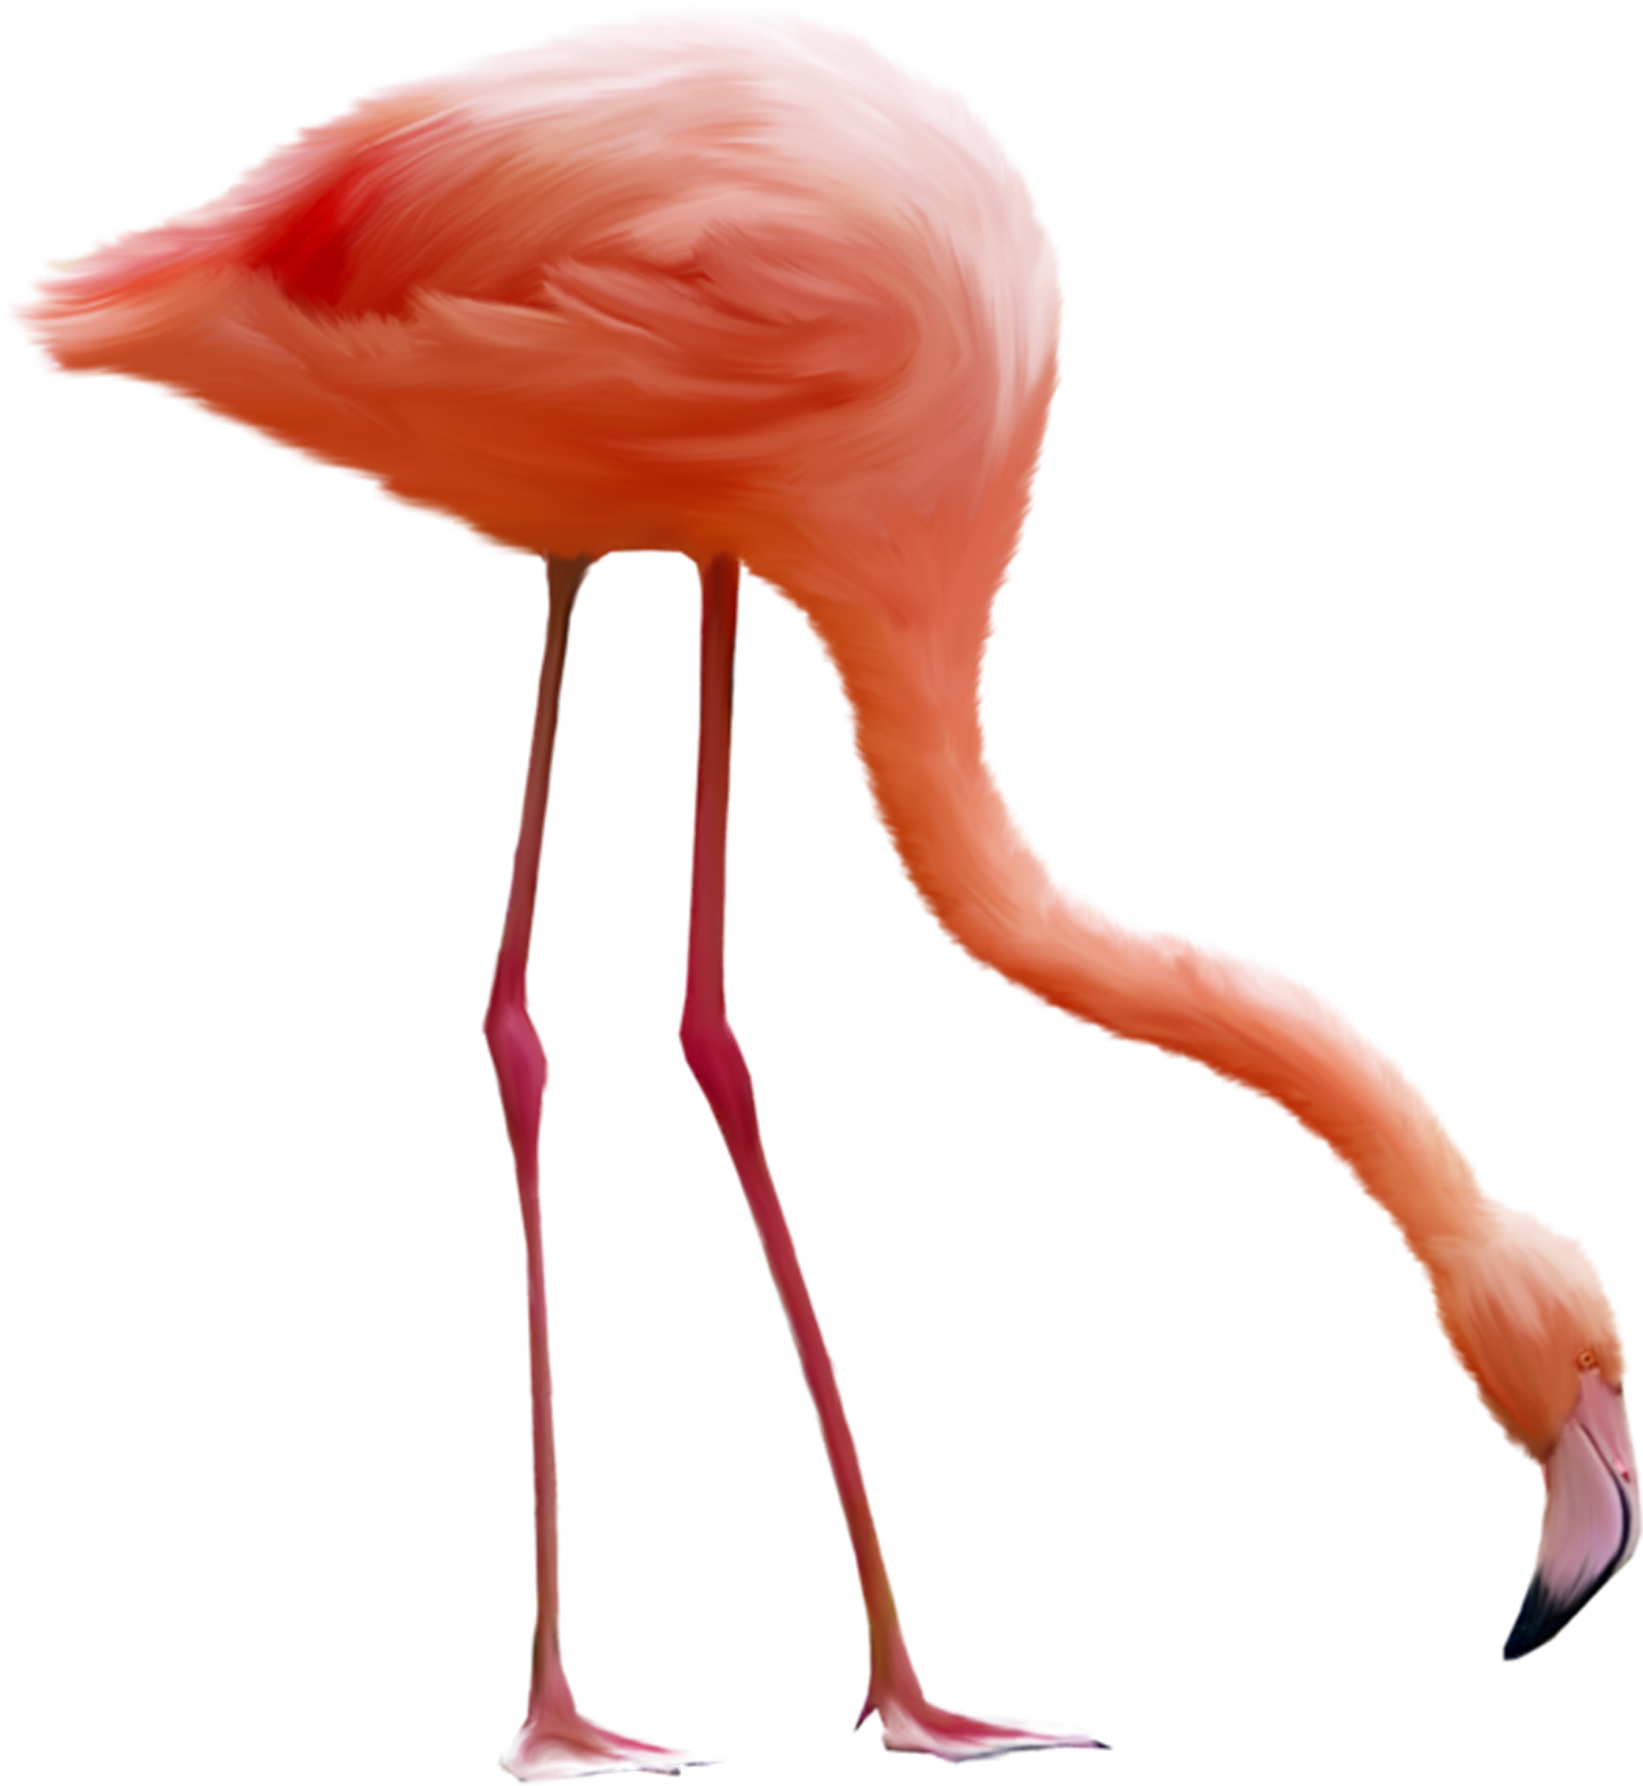 flamingo clipart transparent background